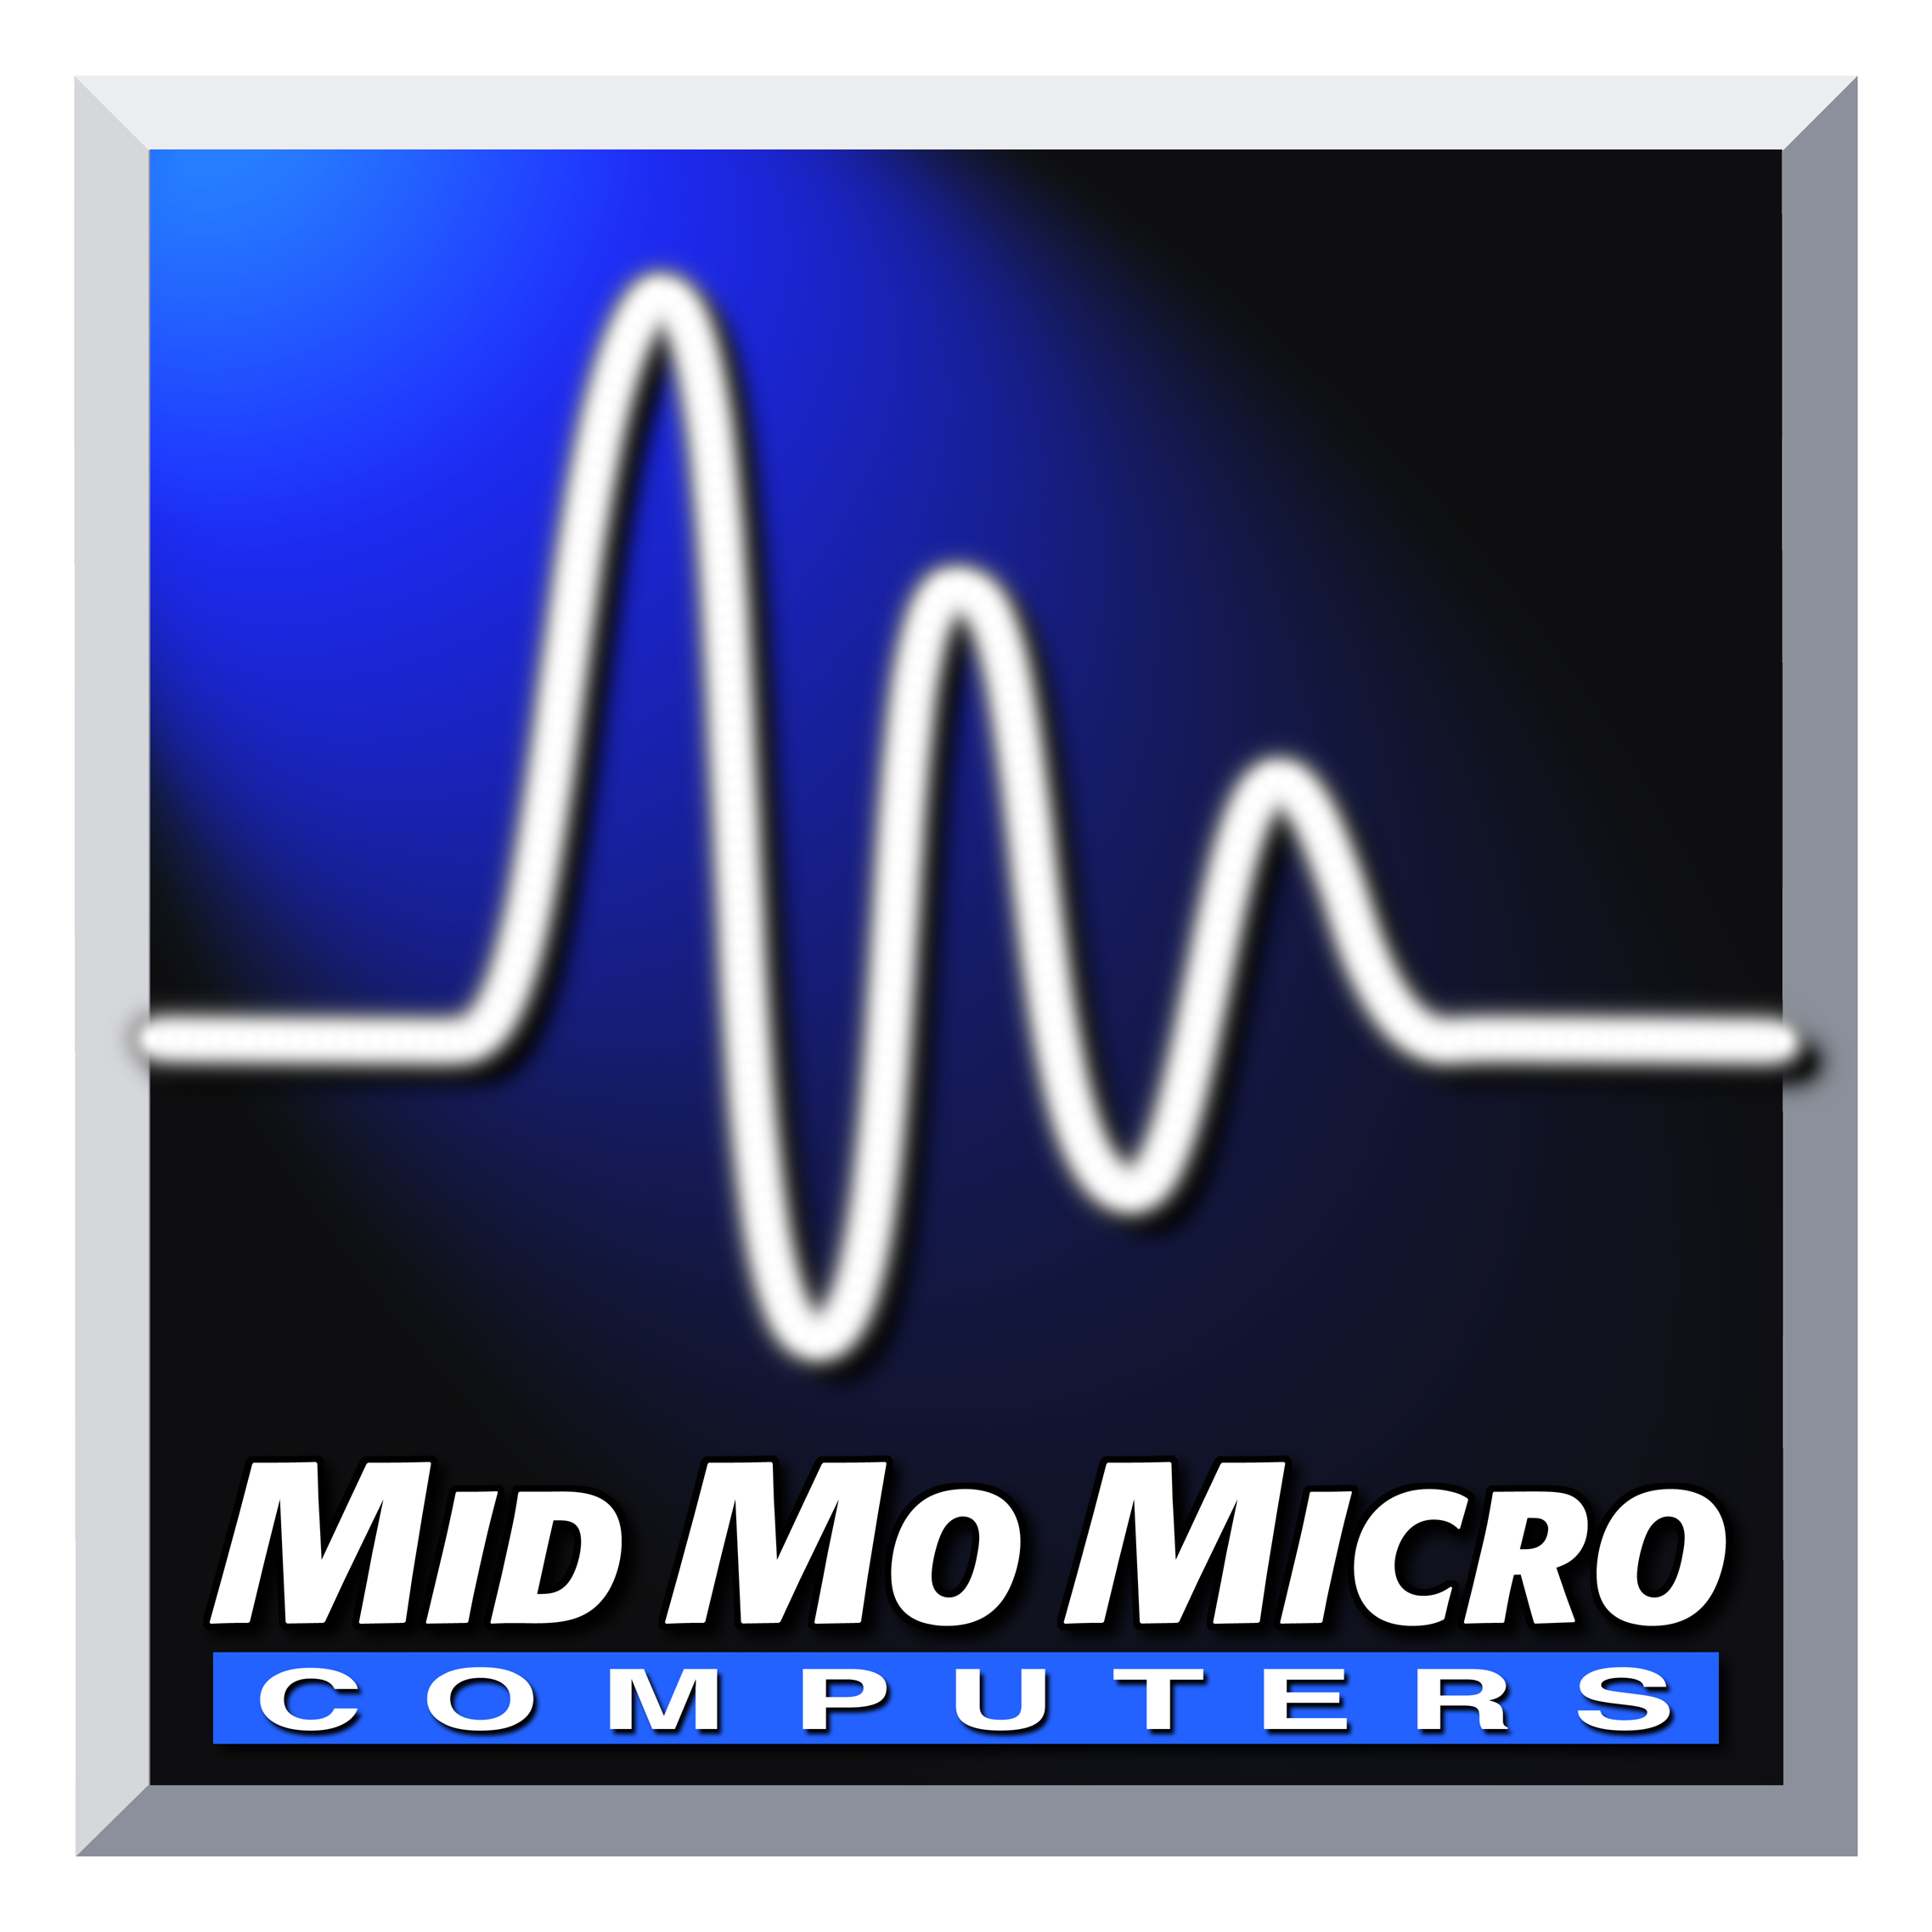 Mid MO Micro Internet Services